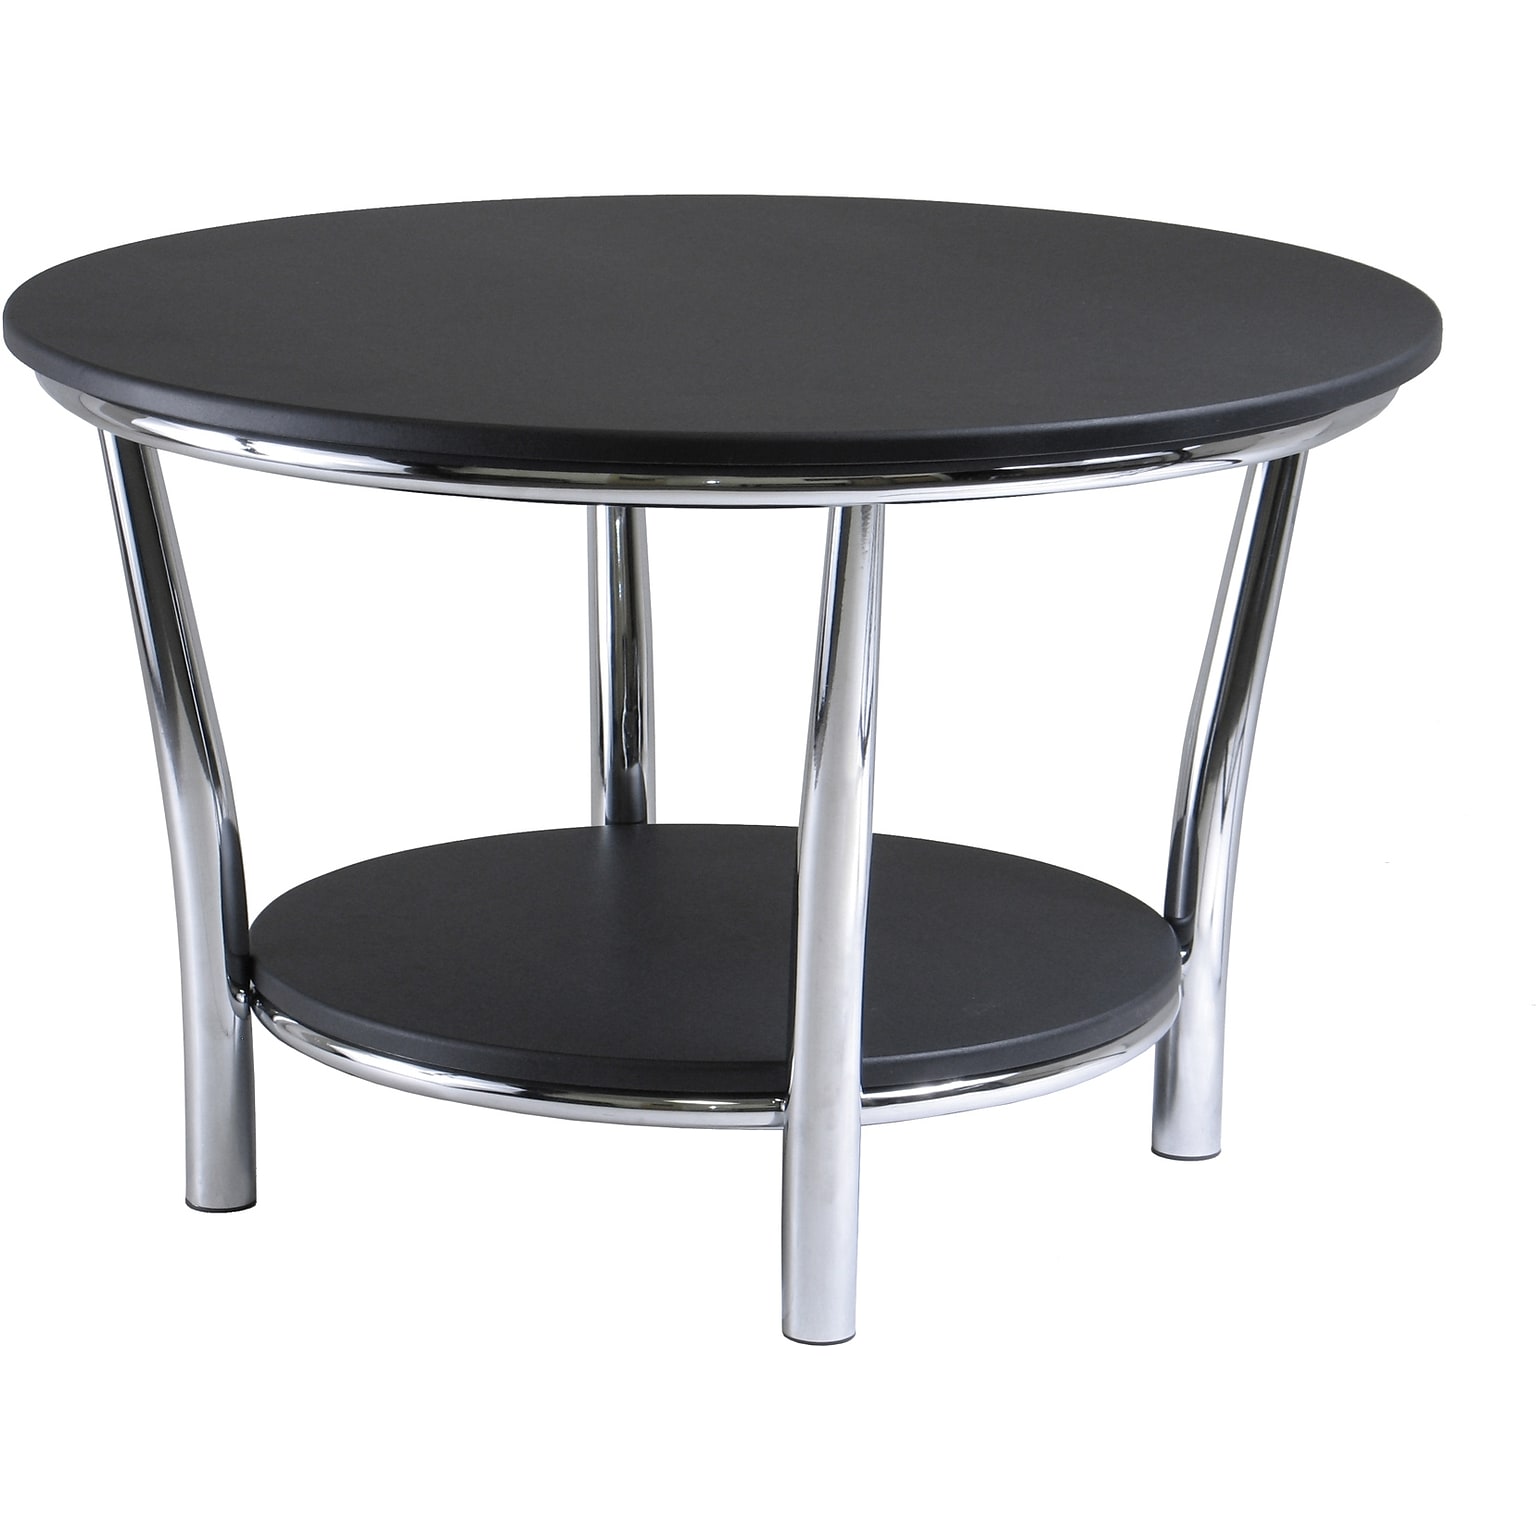 Winsome Maya 18.7 x 29.33 x 29.33 Medium Density Fiber Round Coffee Table, Black